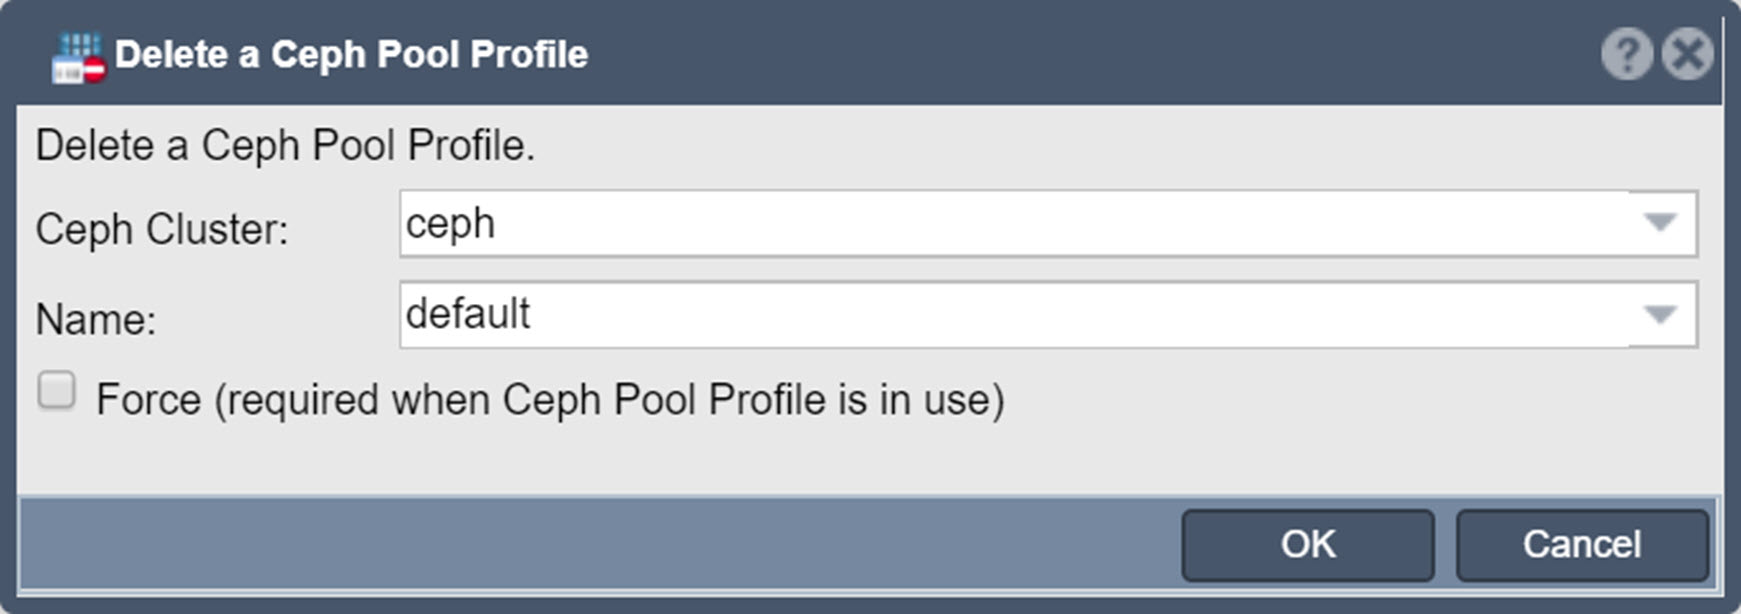 Delete Ceph Pool Profile.jpg